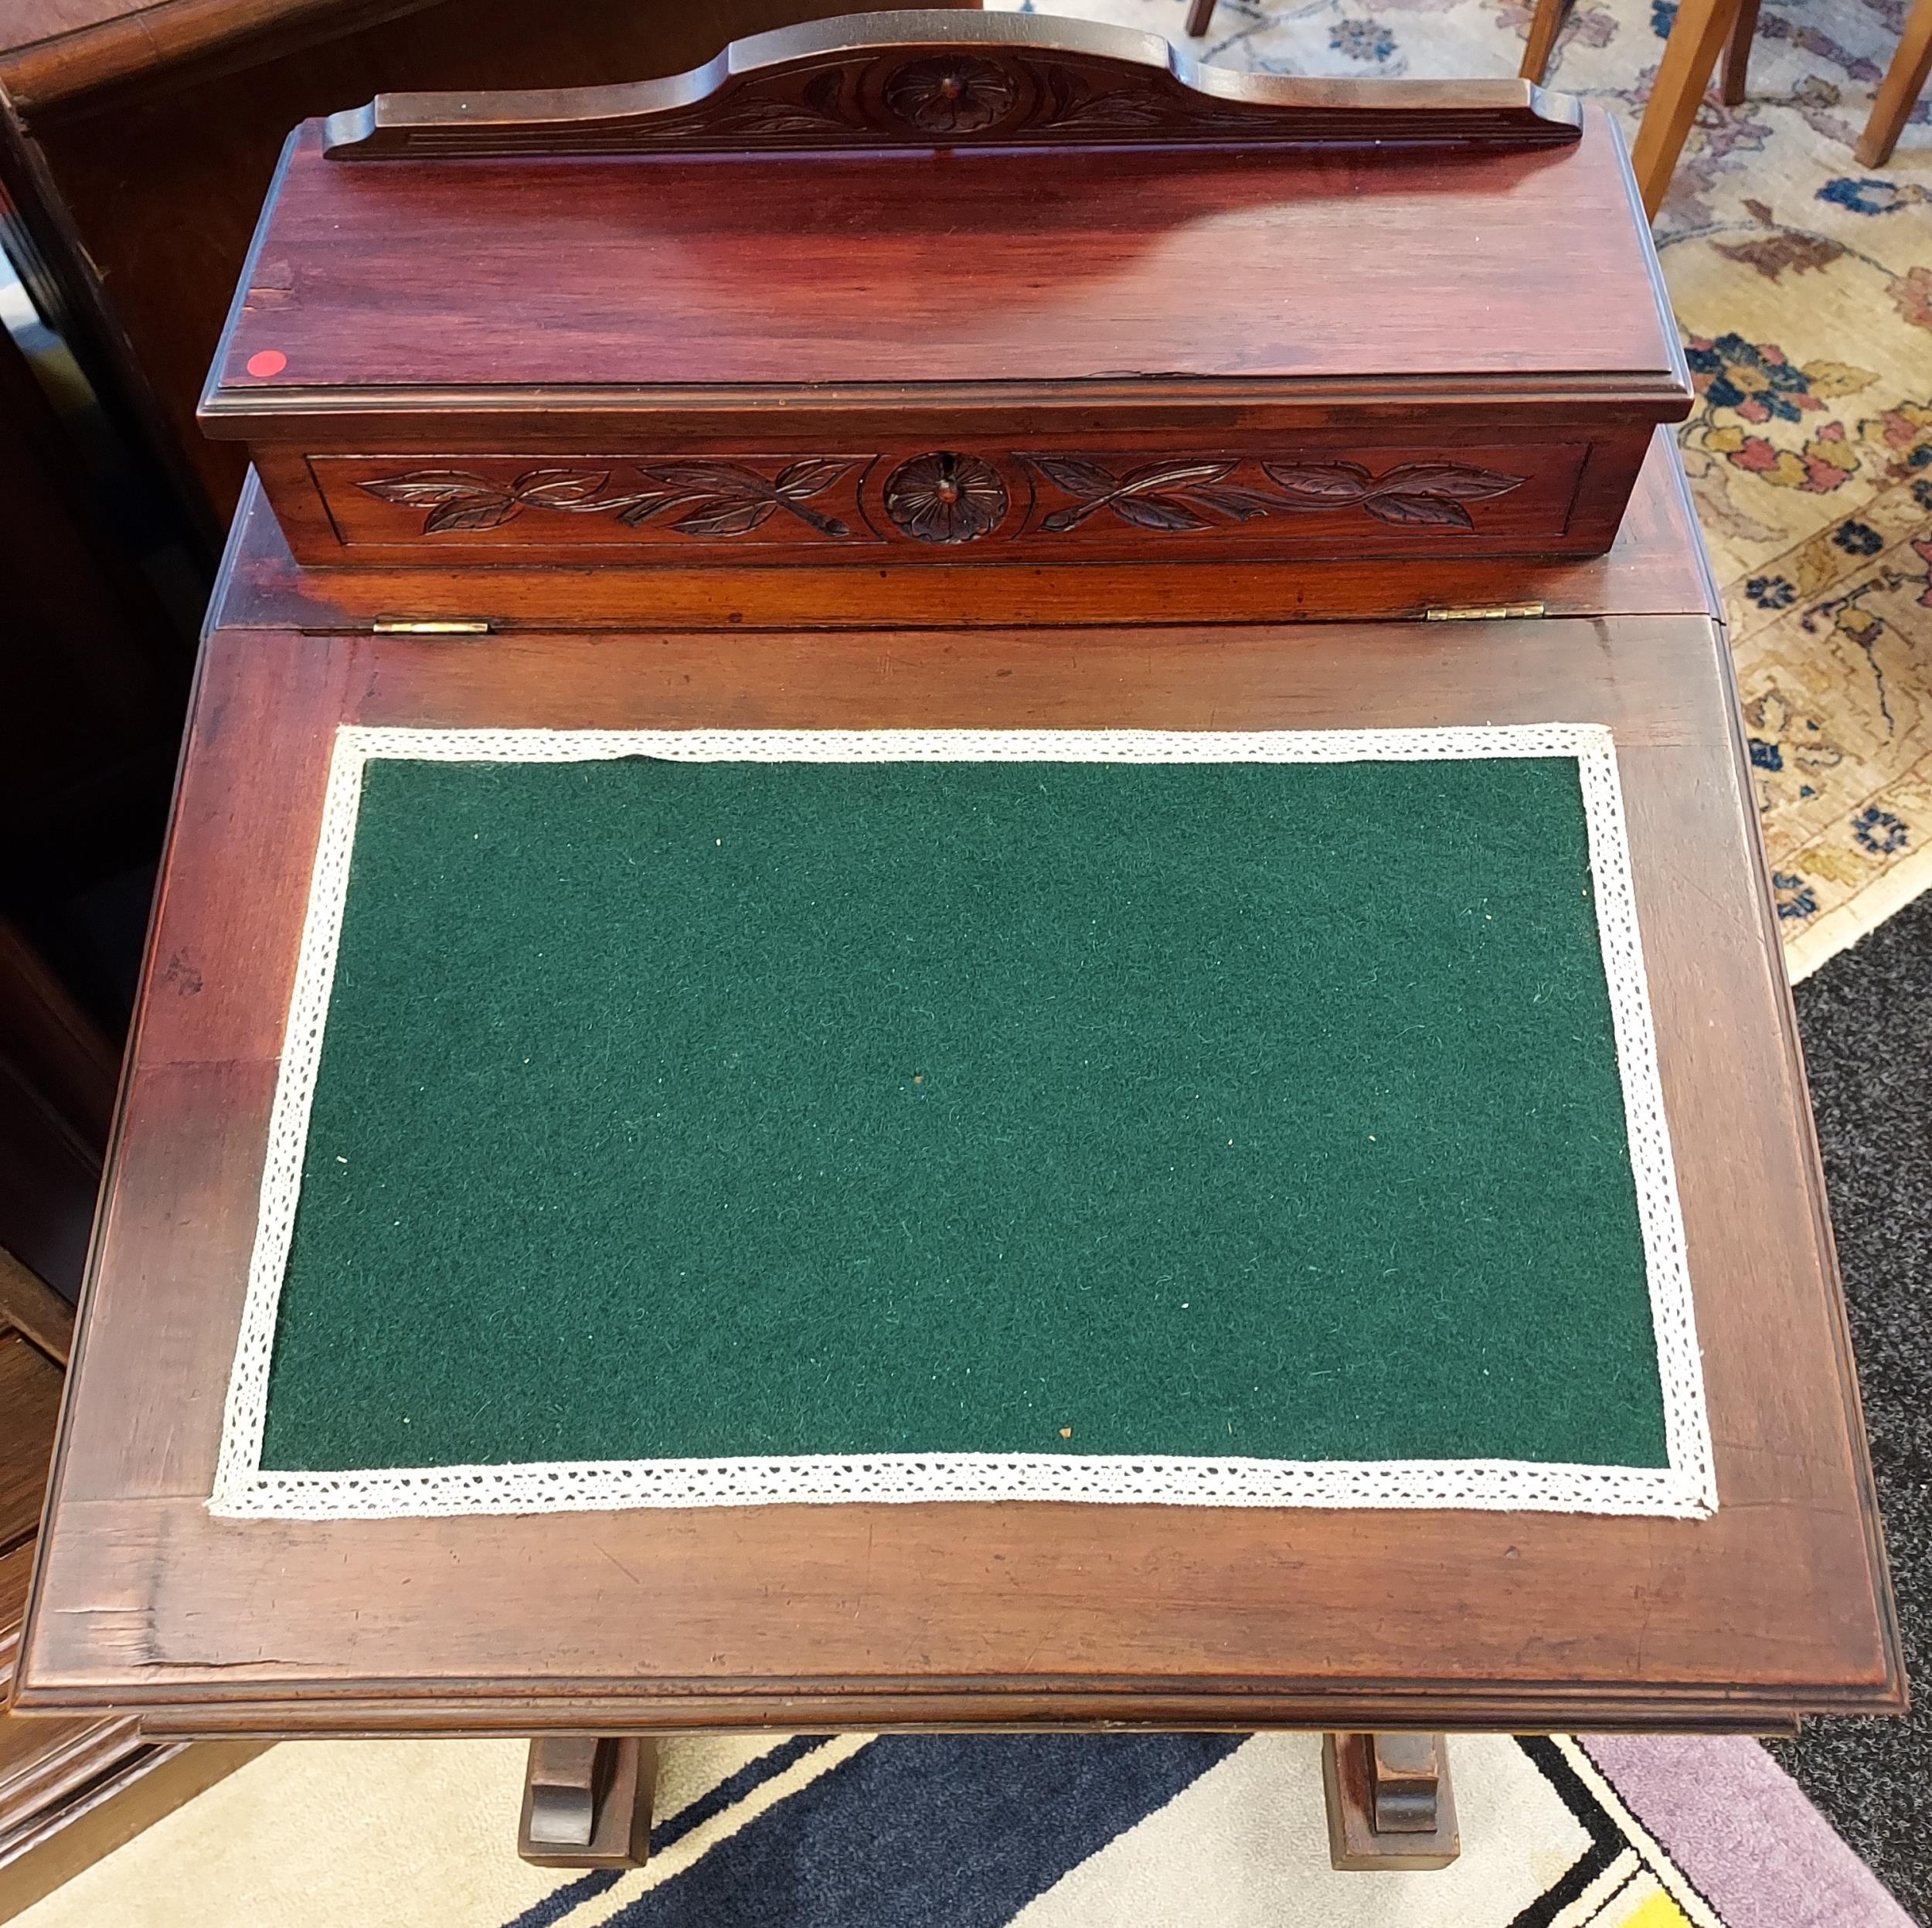 Antique Davenport writing desk. [86x54x54cm] - Image 3 of 6